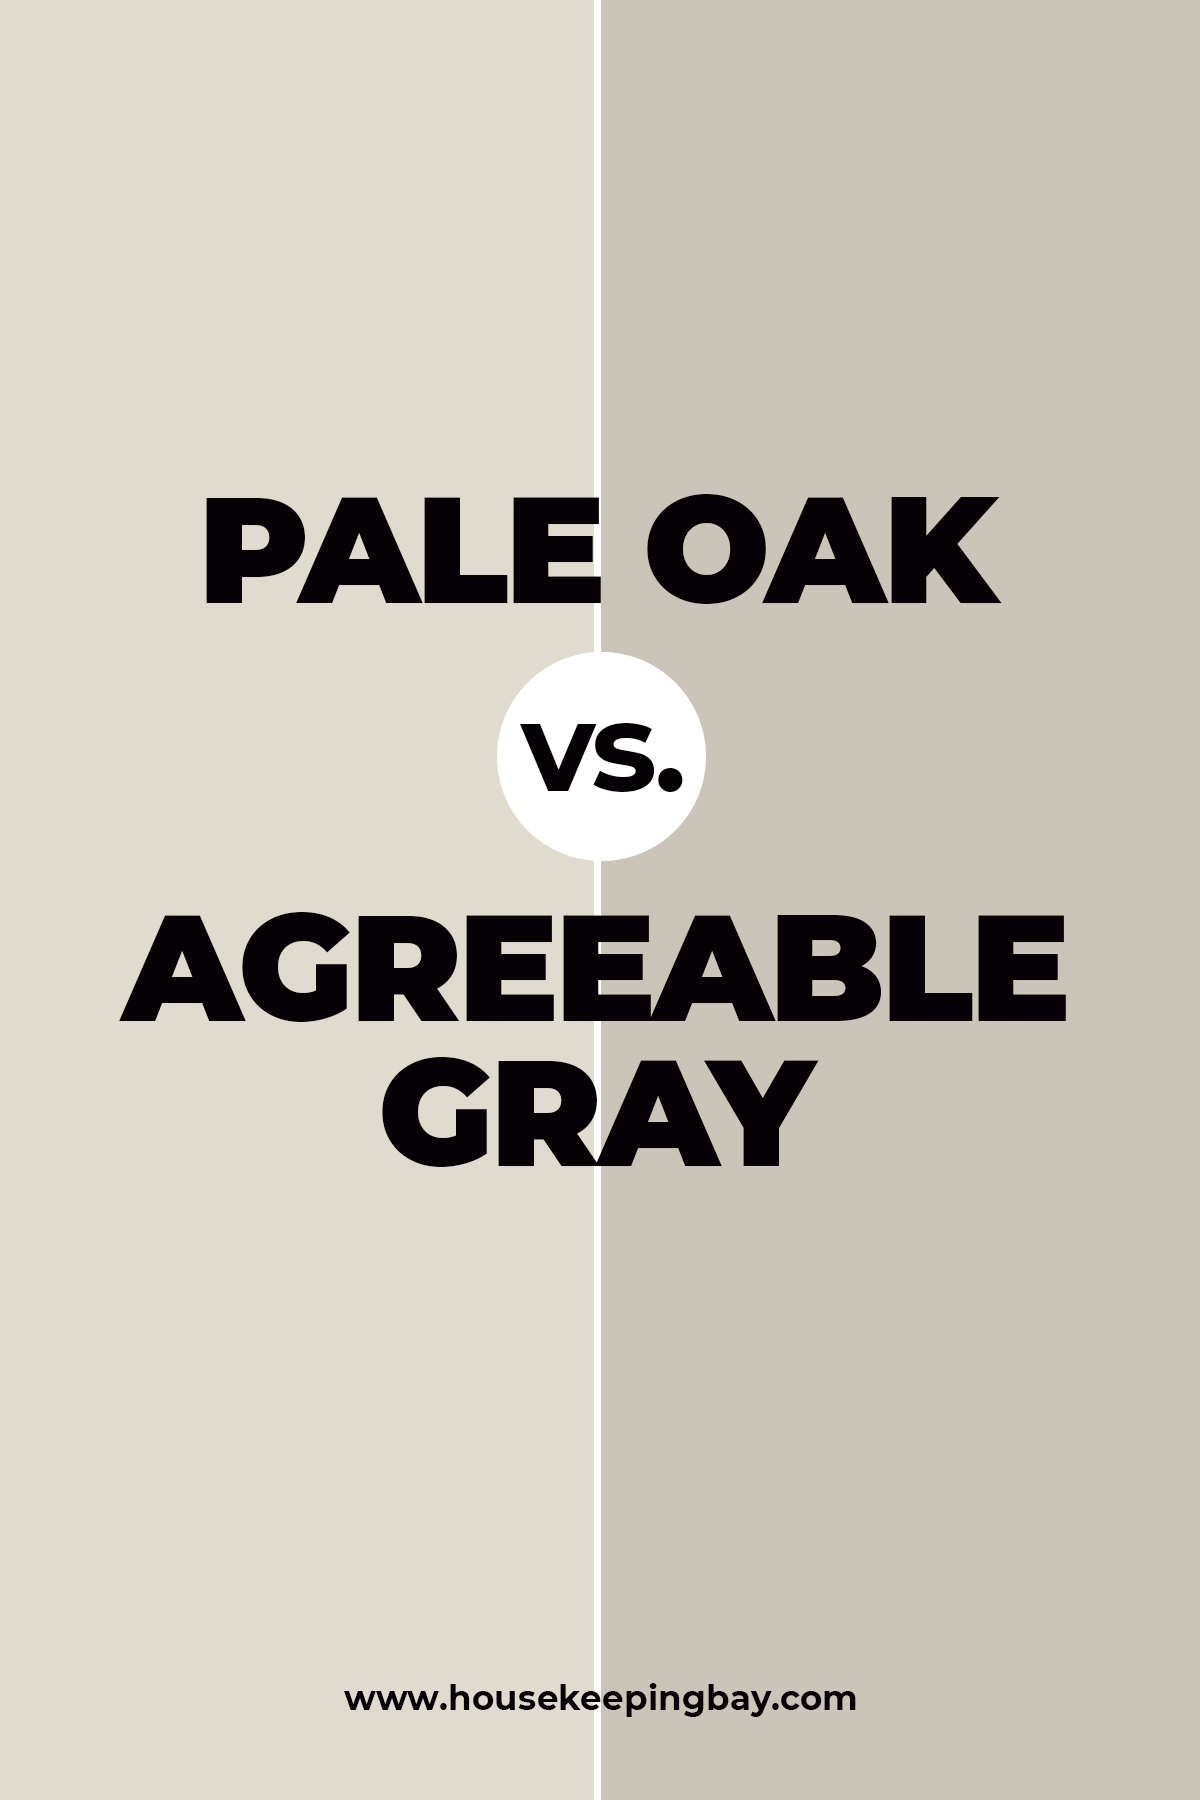 Pale Oak vs. Agreeable Gray